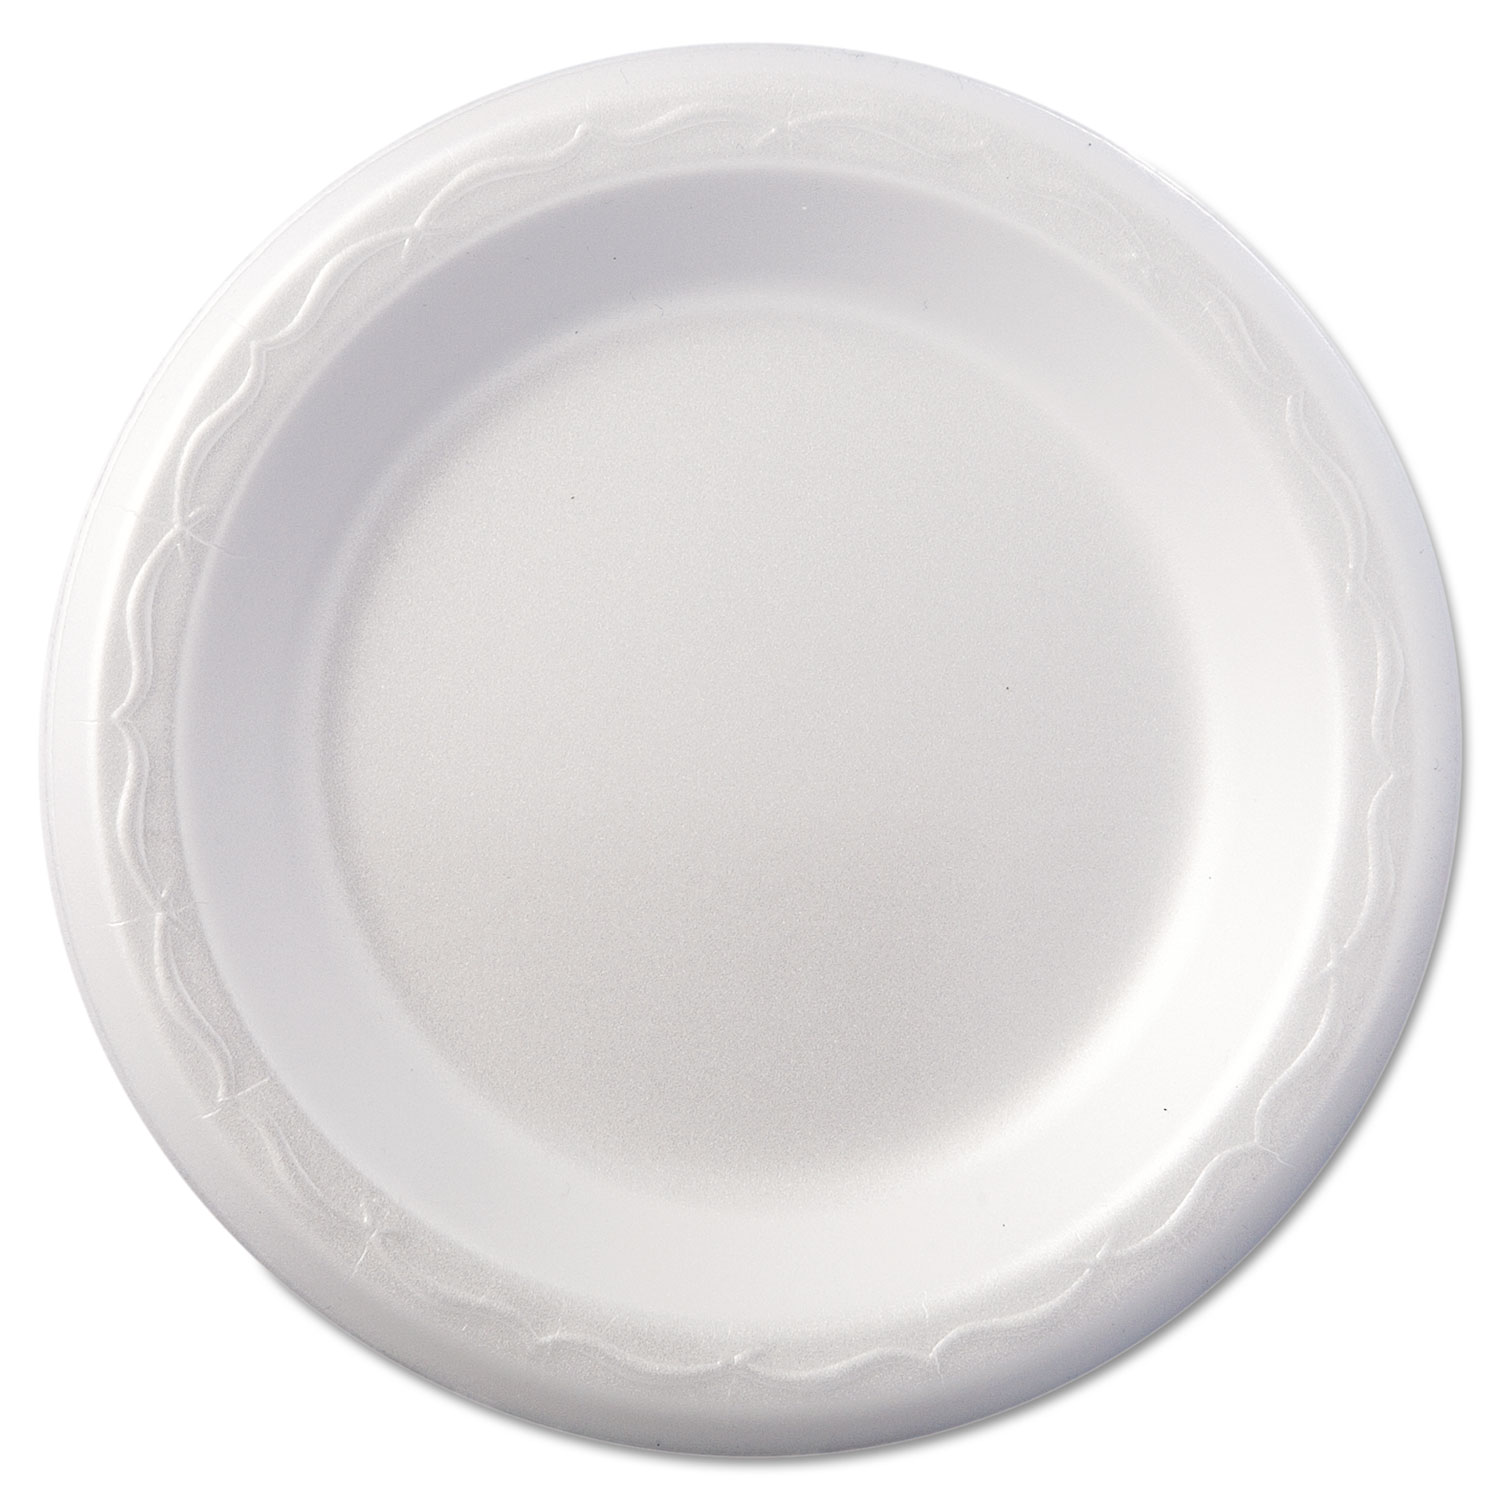  Genpak 80600--- Foam Dinnerware, Plate, 6 dia, White, 125/Pack, 8 Packs/Carton (GNP80600) 